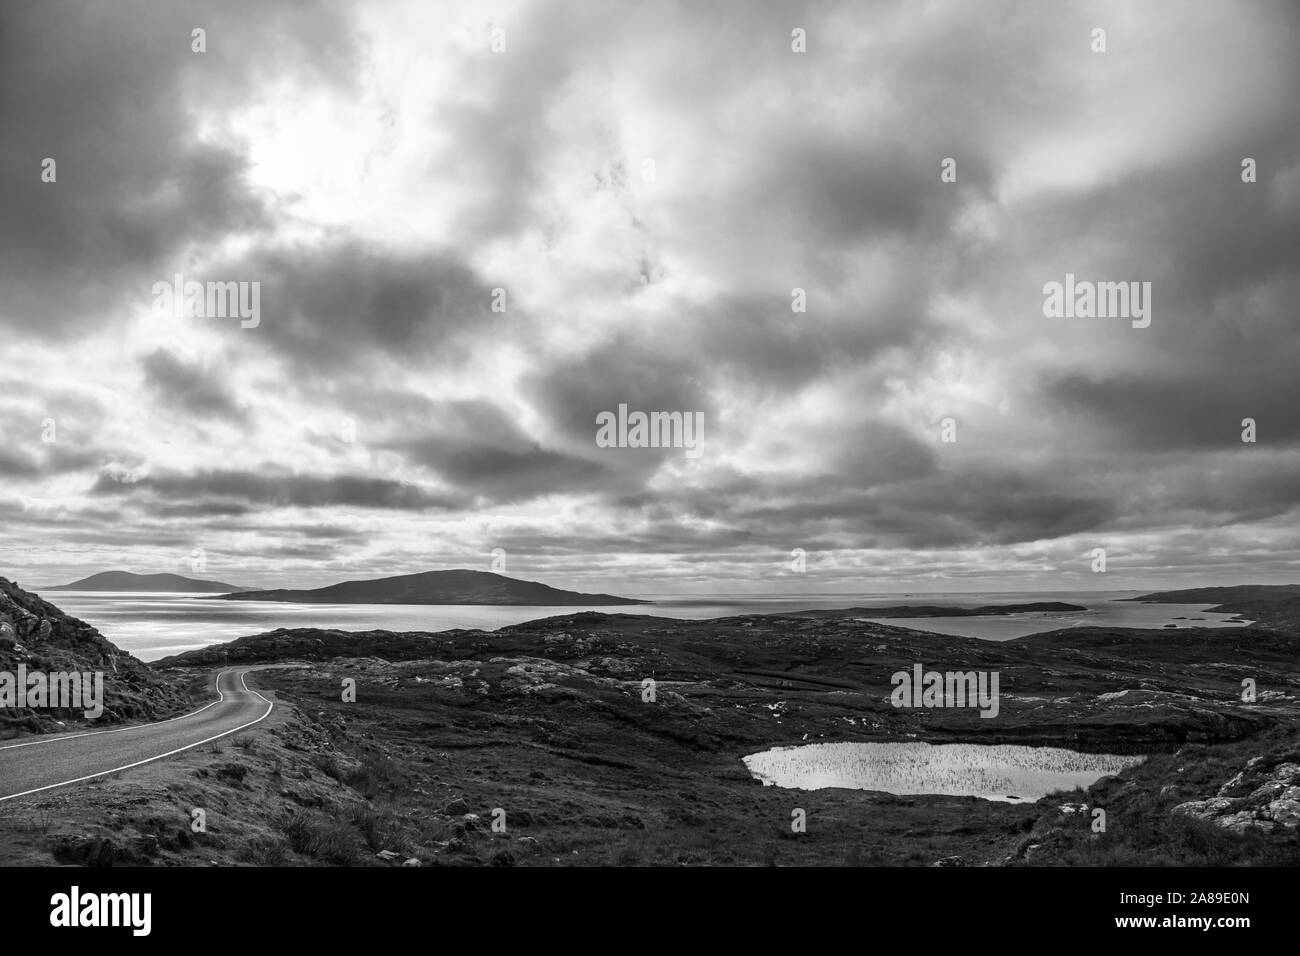 Vista verso Taransay dalla strada al Huisinis, Harris, Ebridi Esterne, Scozia Foto Stock